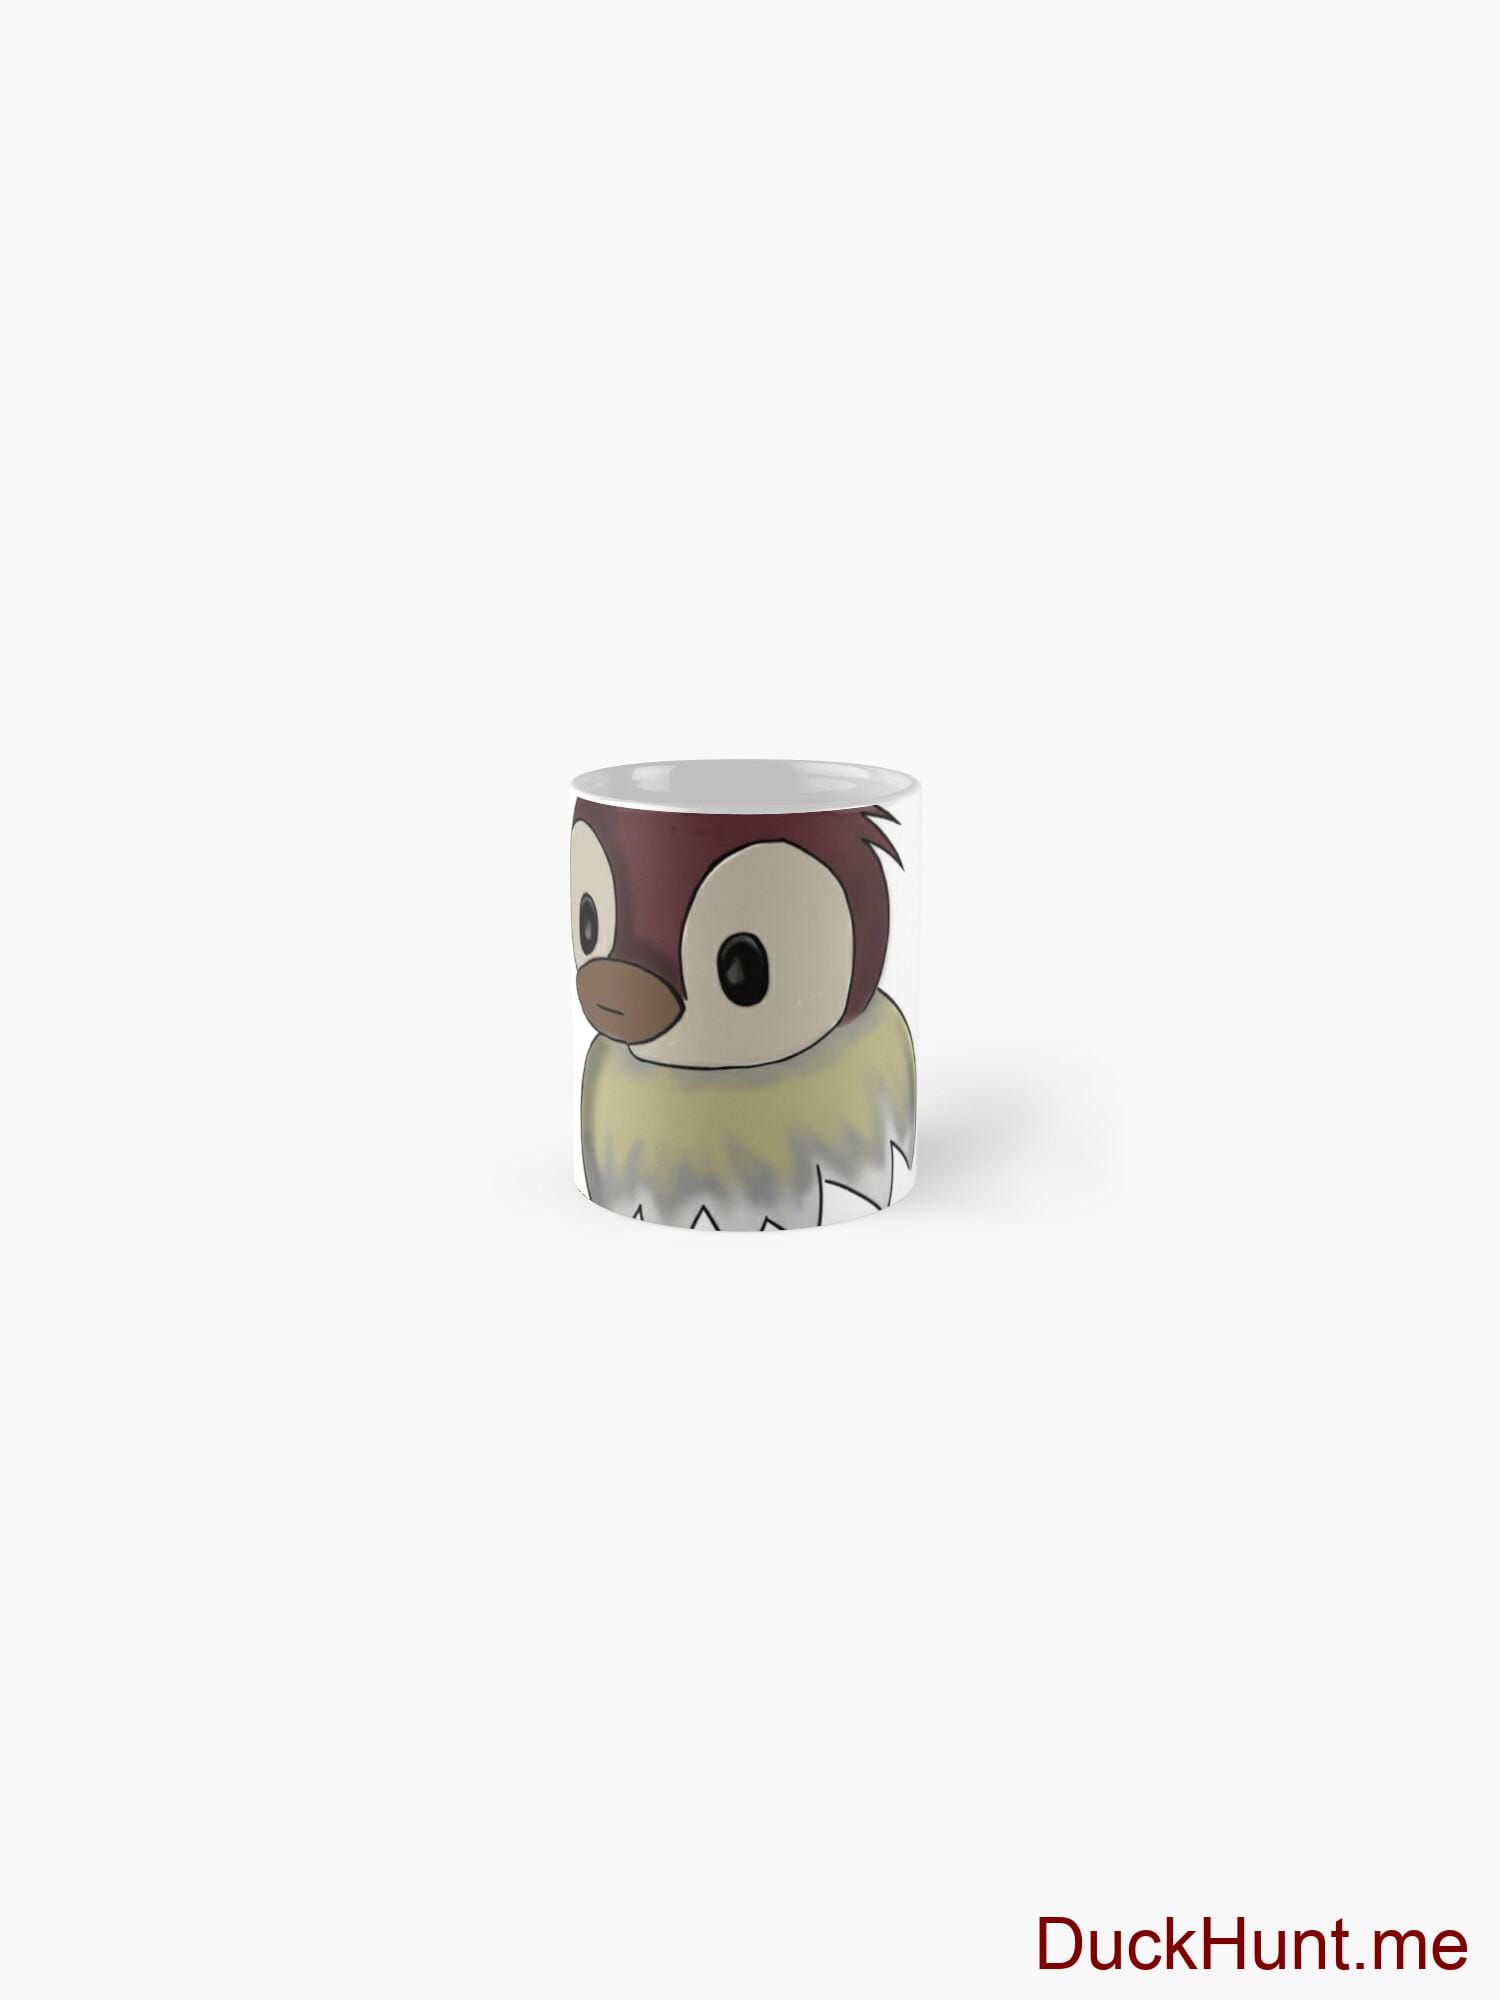 Ghost Duck (fogless) Mug alternative image 4